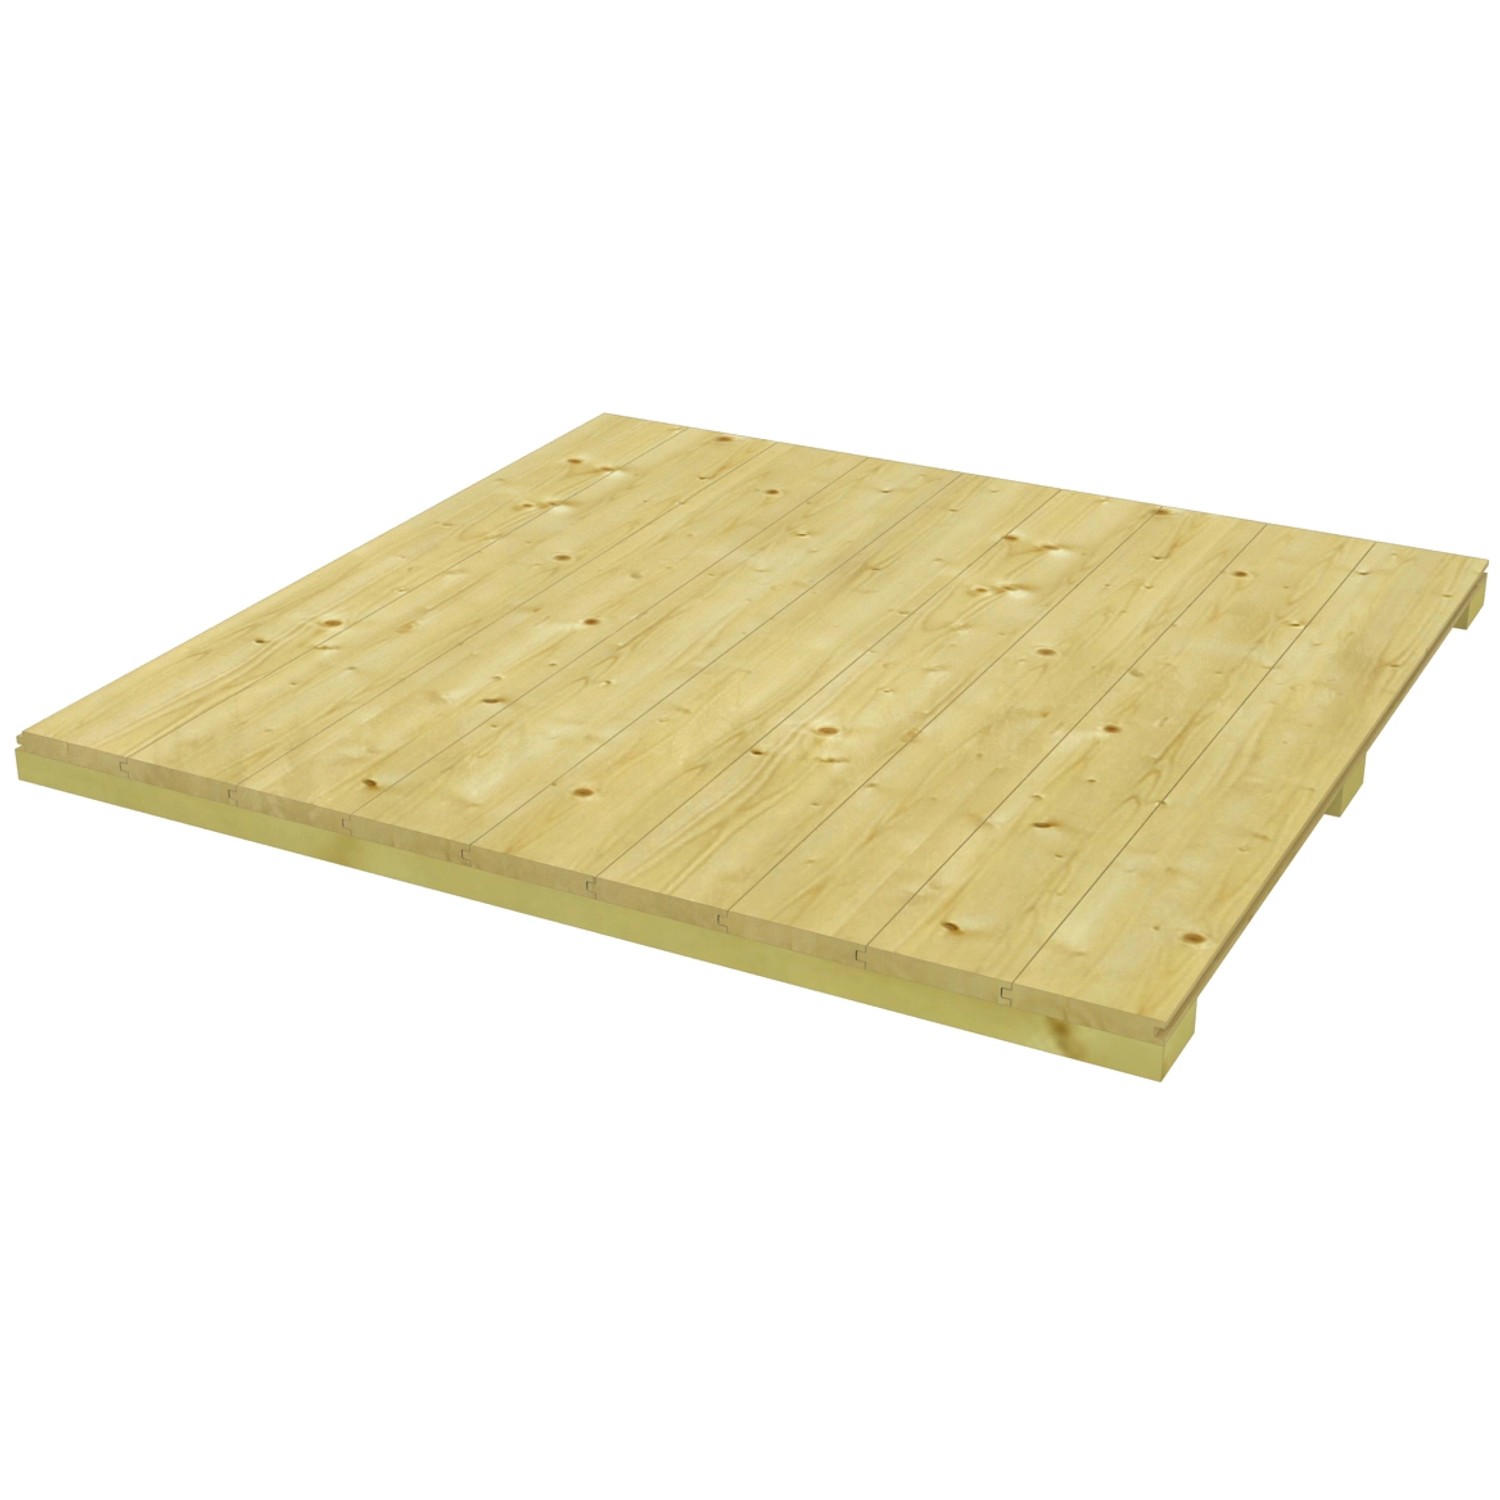 Skan Holz Fußboden für Gartenhaus/Gerätehaus CrossCube Gr. 3 B x T 253 cm x 253 cm von Skan Holz